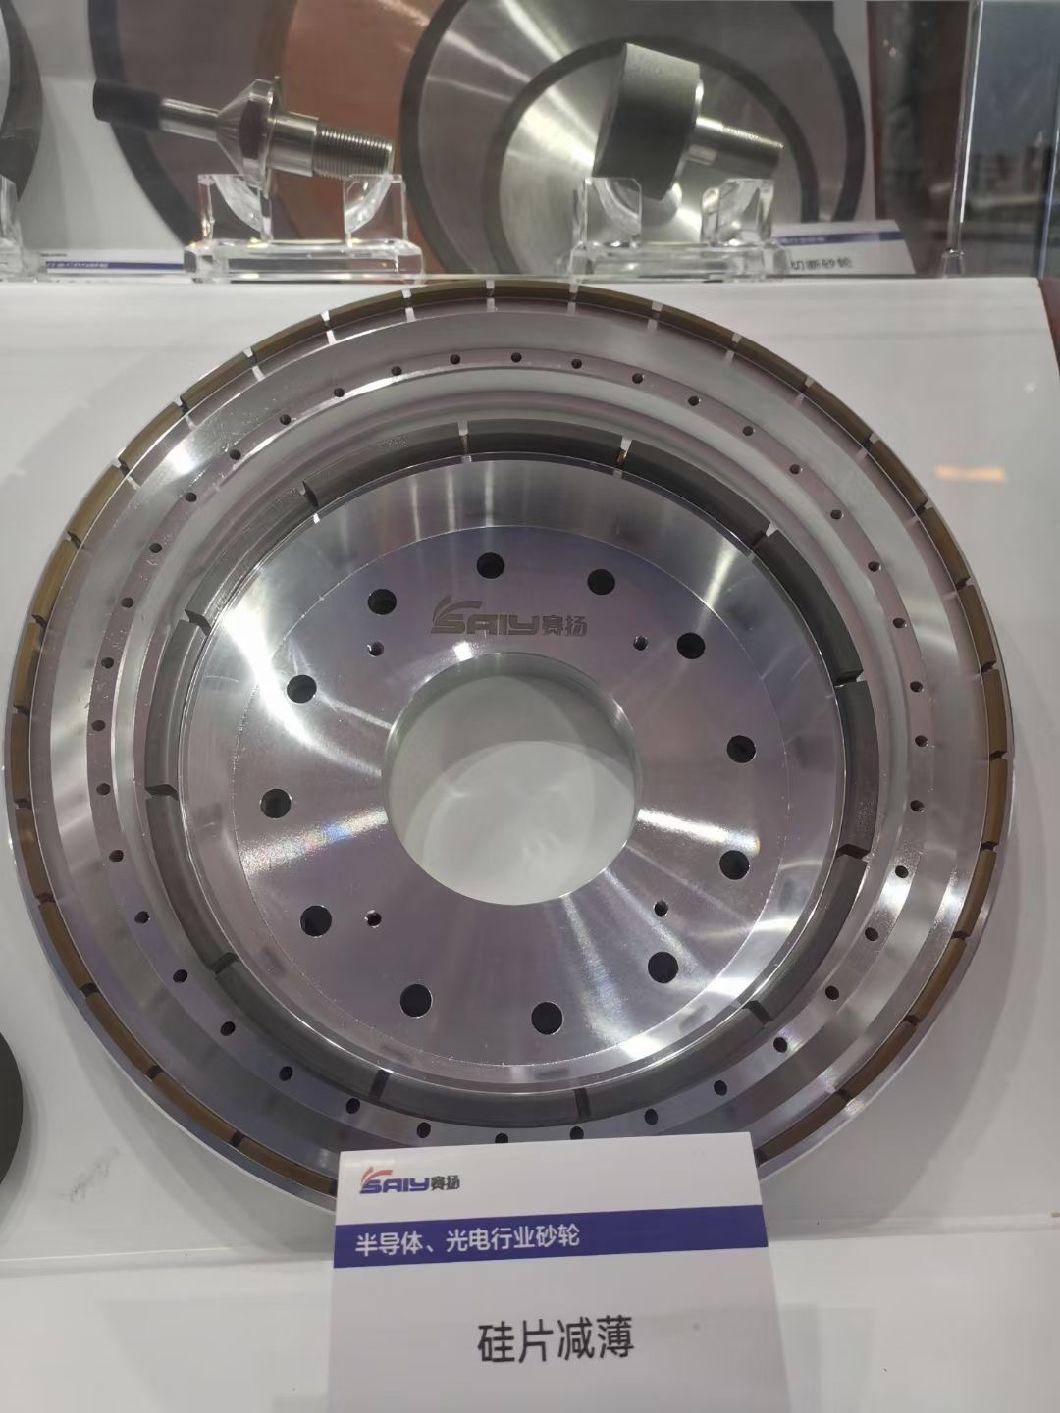 Vitrified-Bonded CBN Grinding Tools for External Cylindrical Grinding, Superabrasive Diamond Wheels